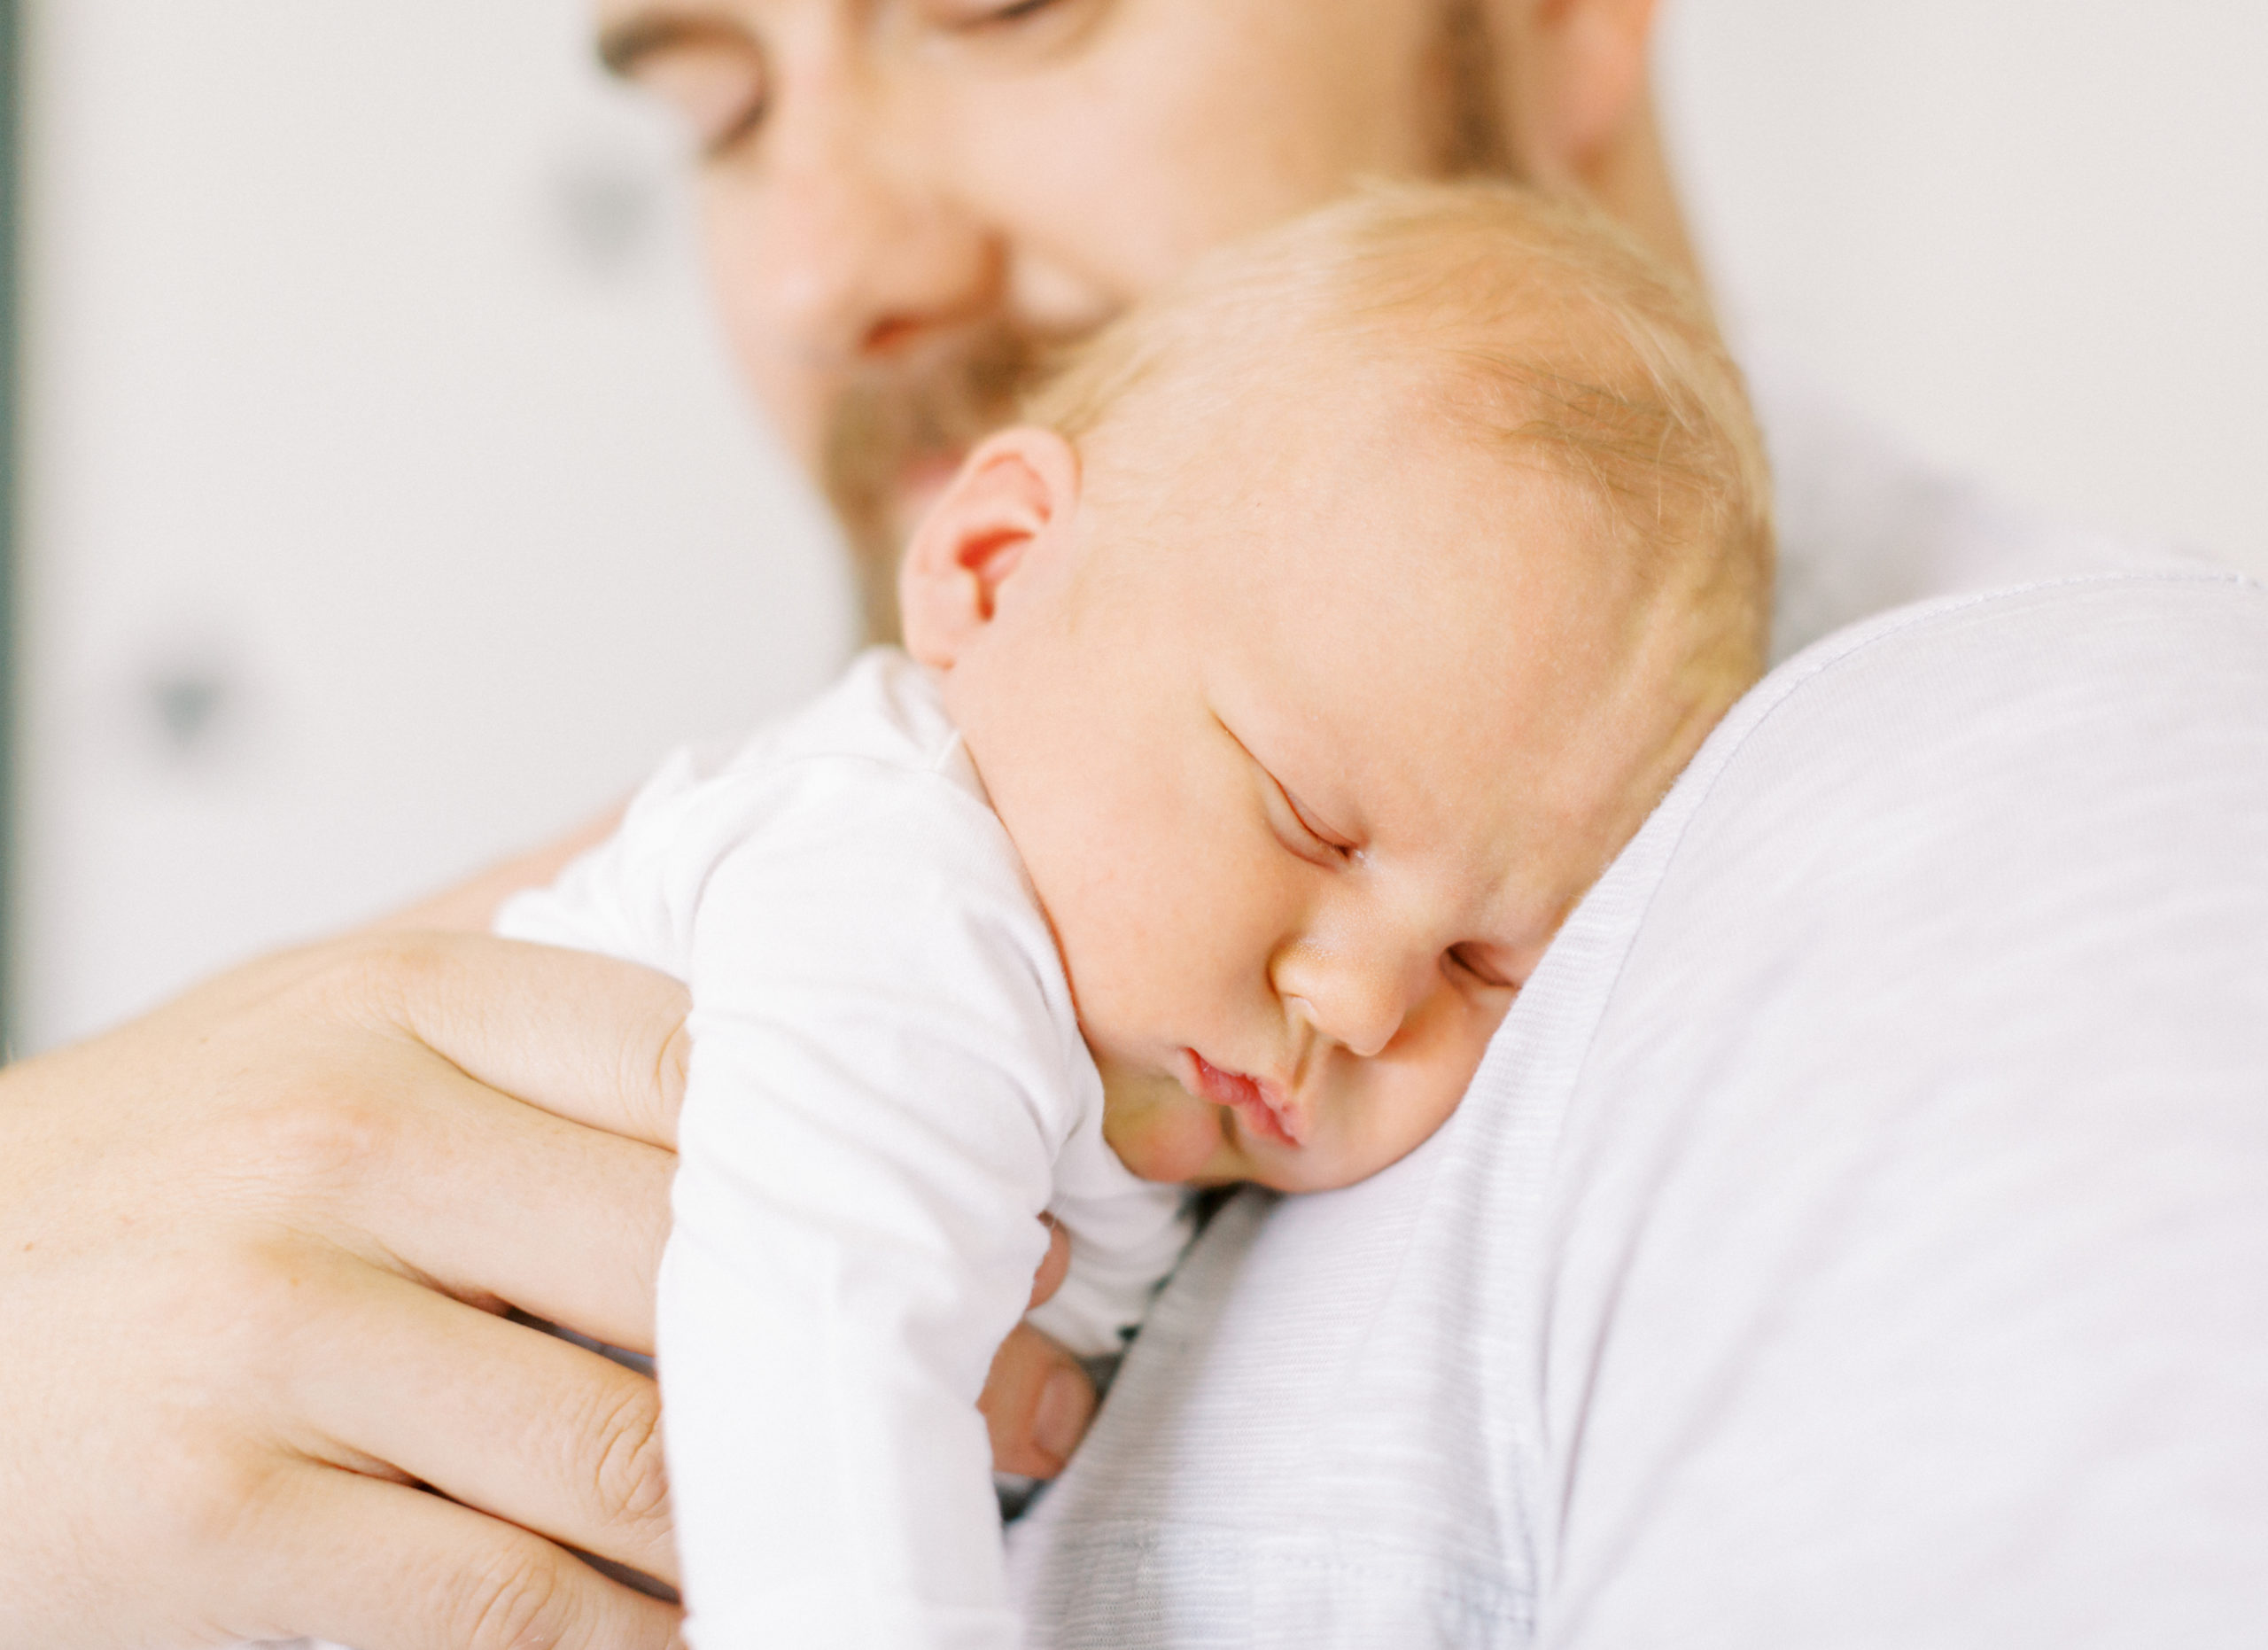 yuma-newborn-photographers-dad-holding-newborn-baby-in-home-portrait